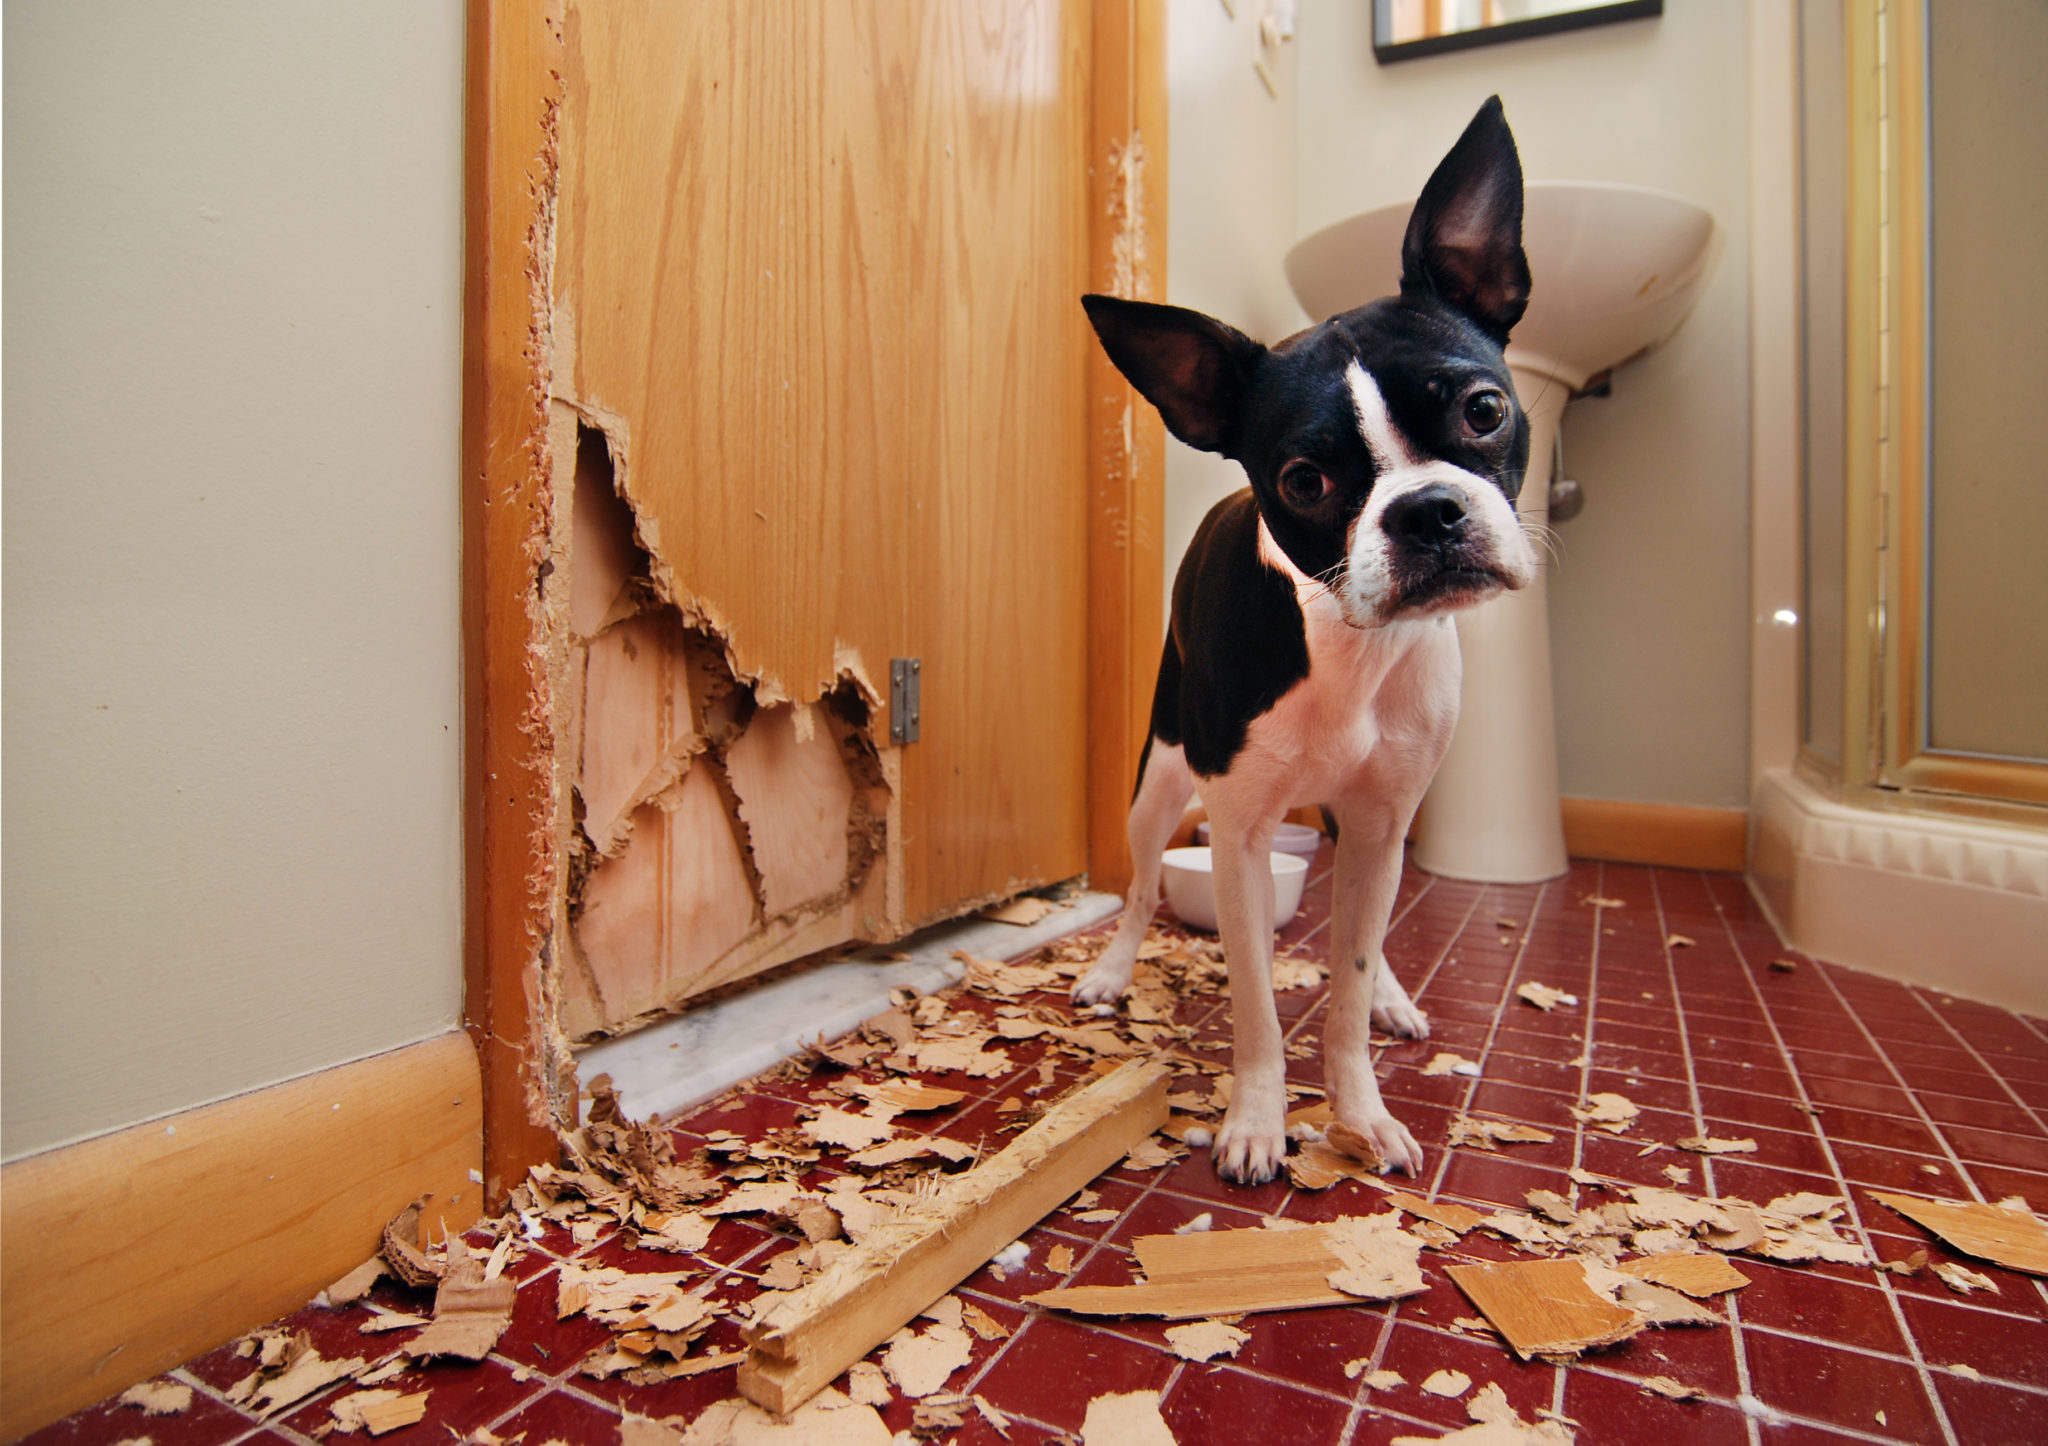 How do you fix destructive behavior in dogs?